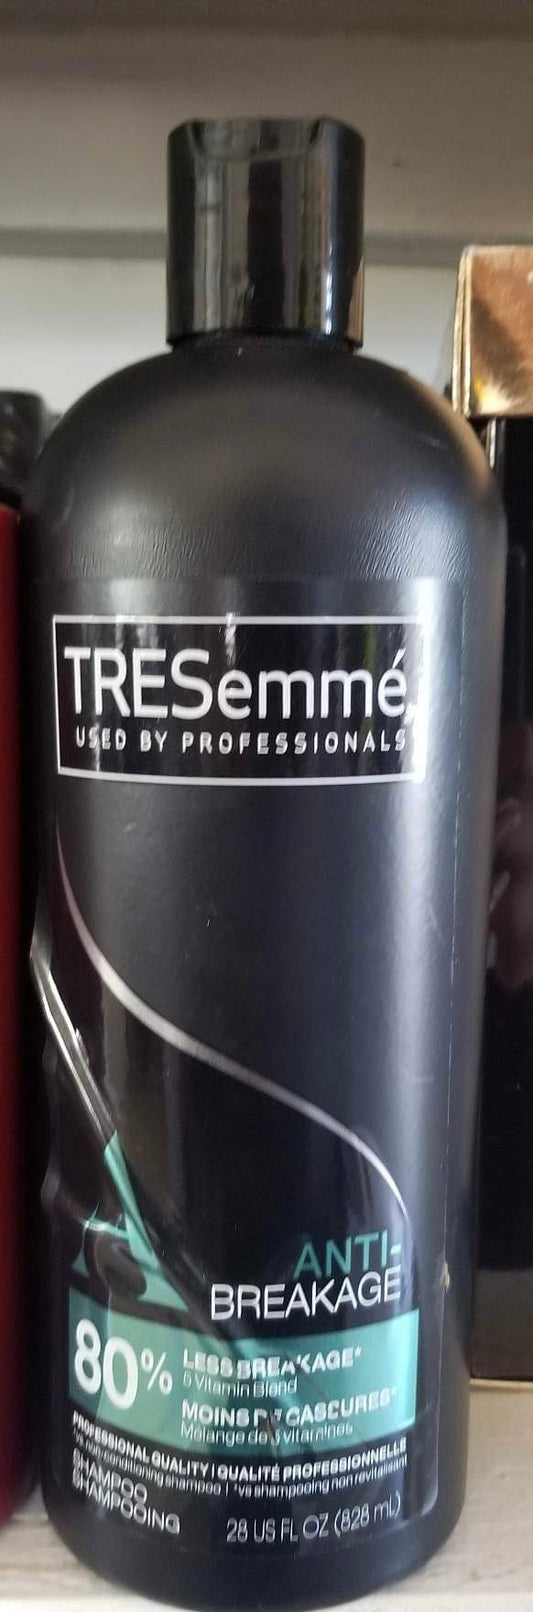 TRESemme shampoo